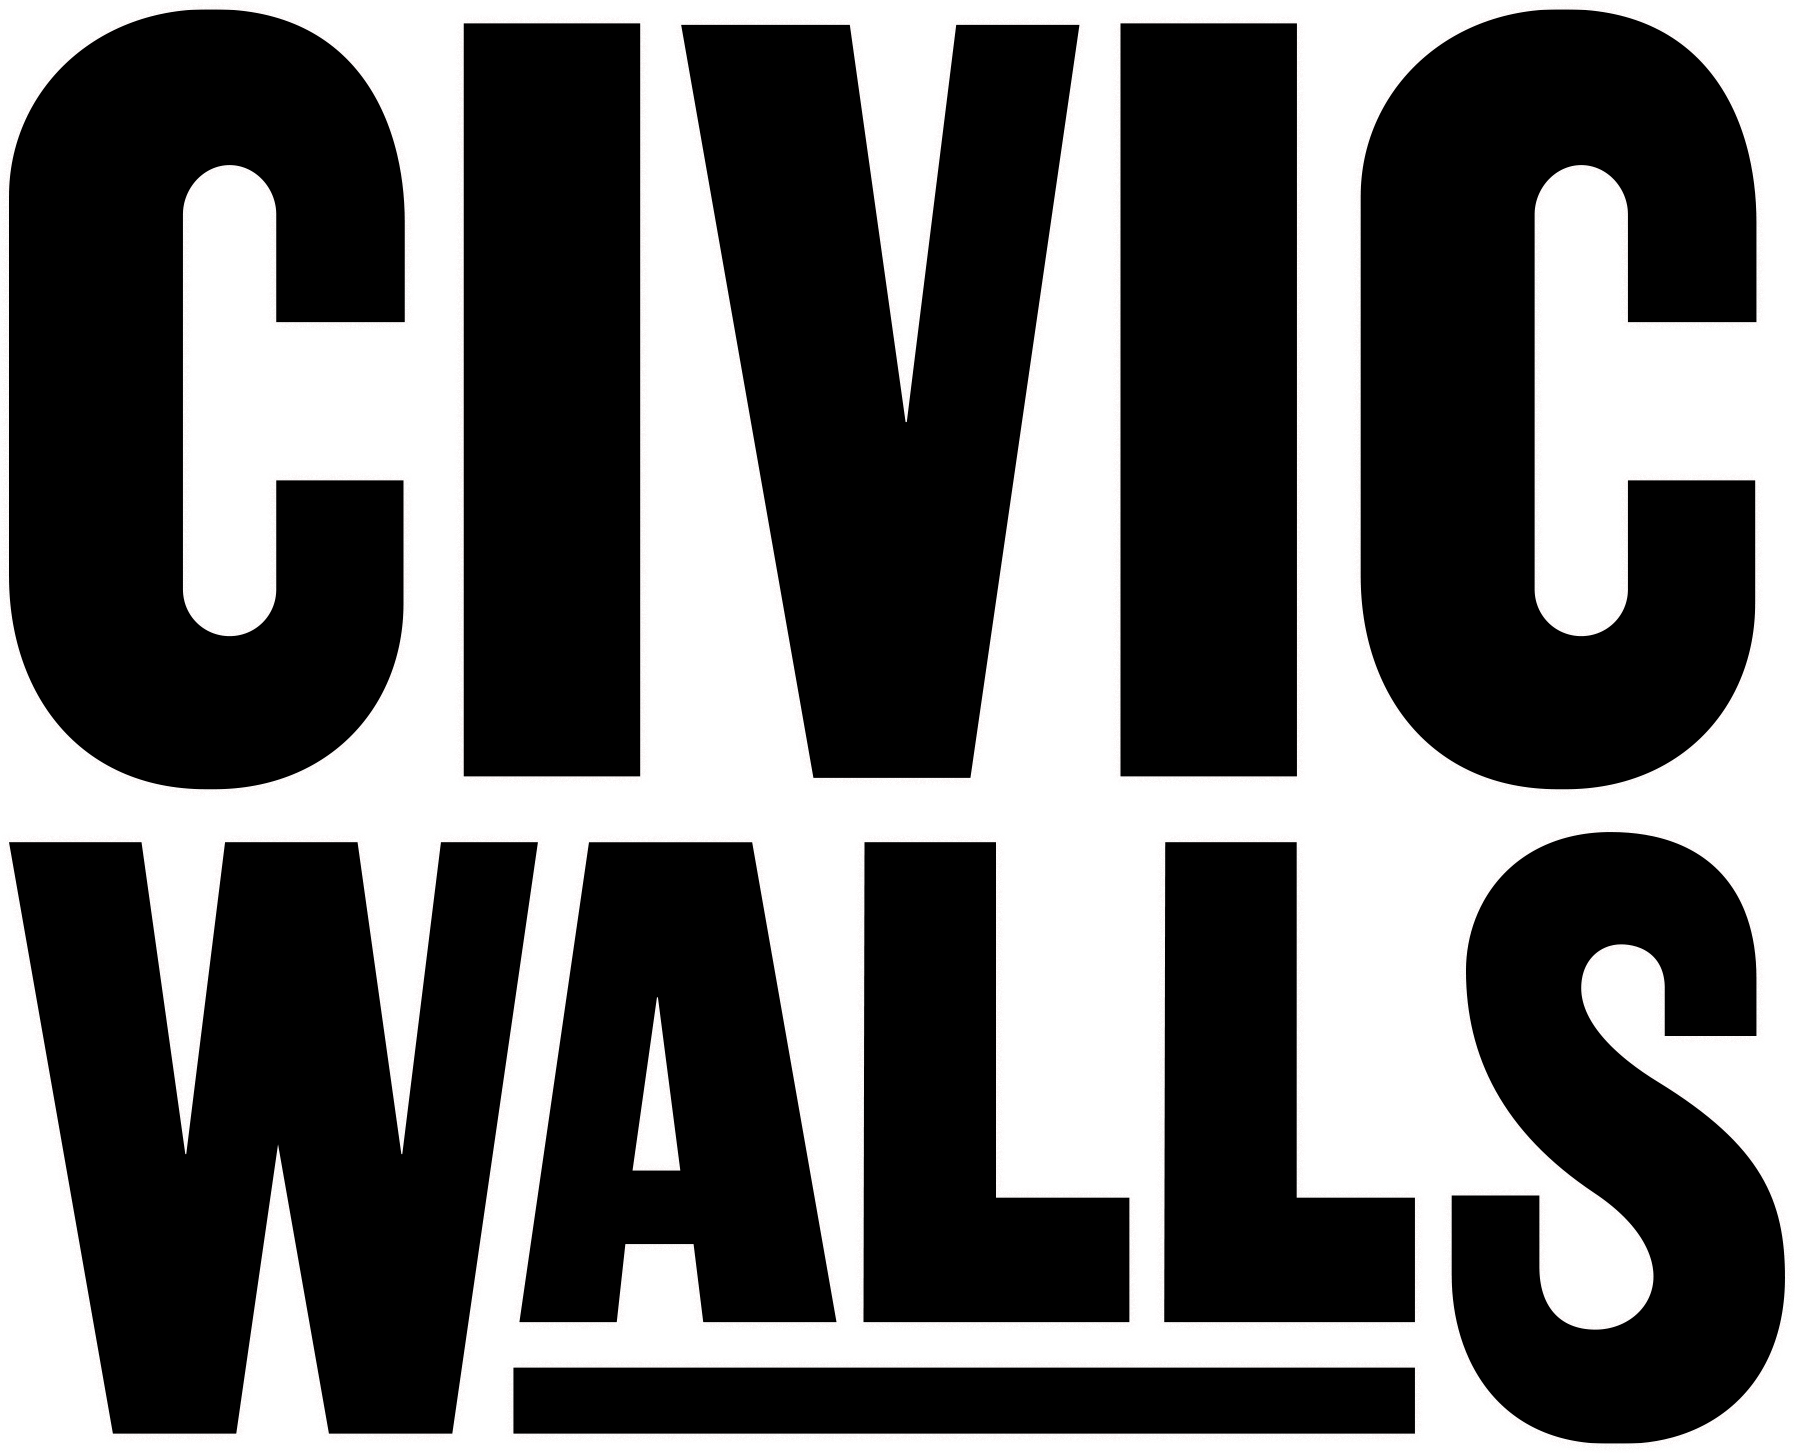 CIVIC WALLS PROJECT